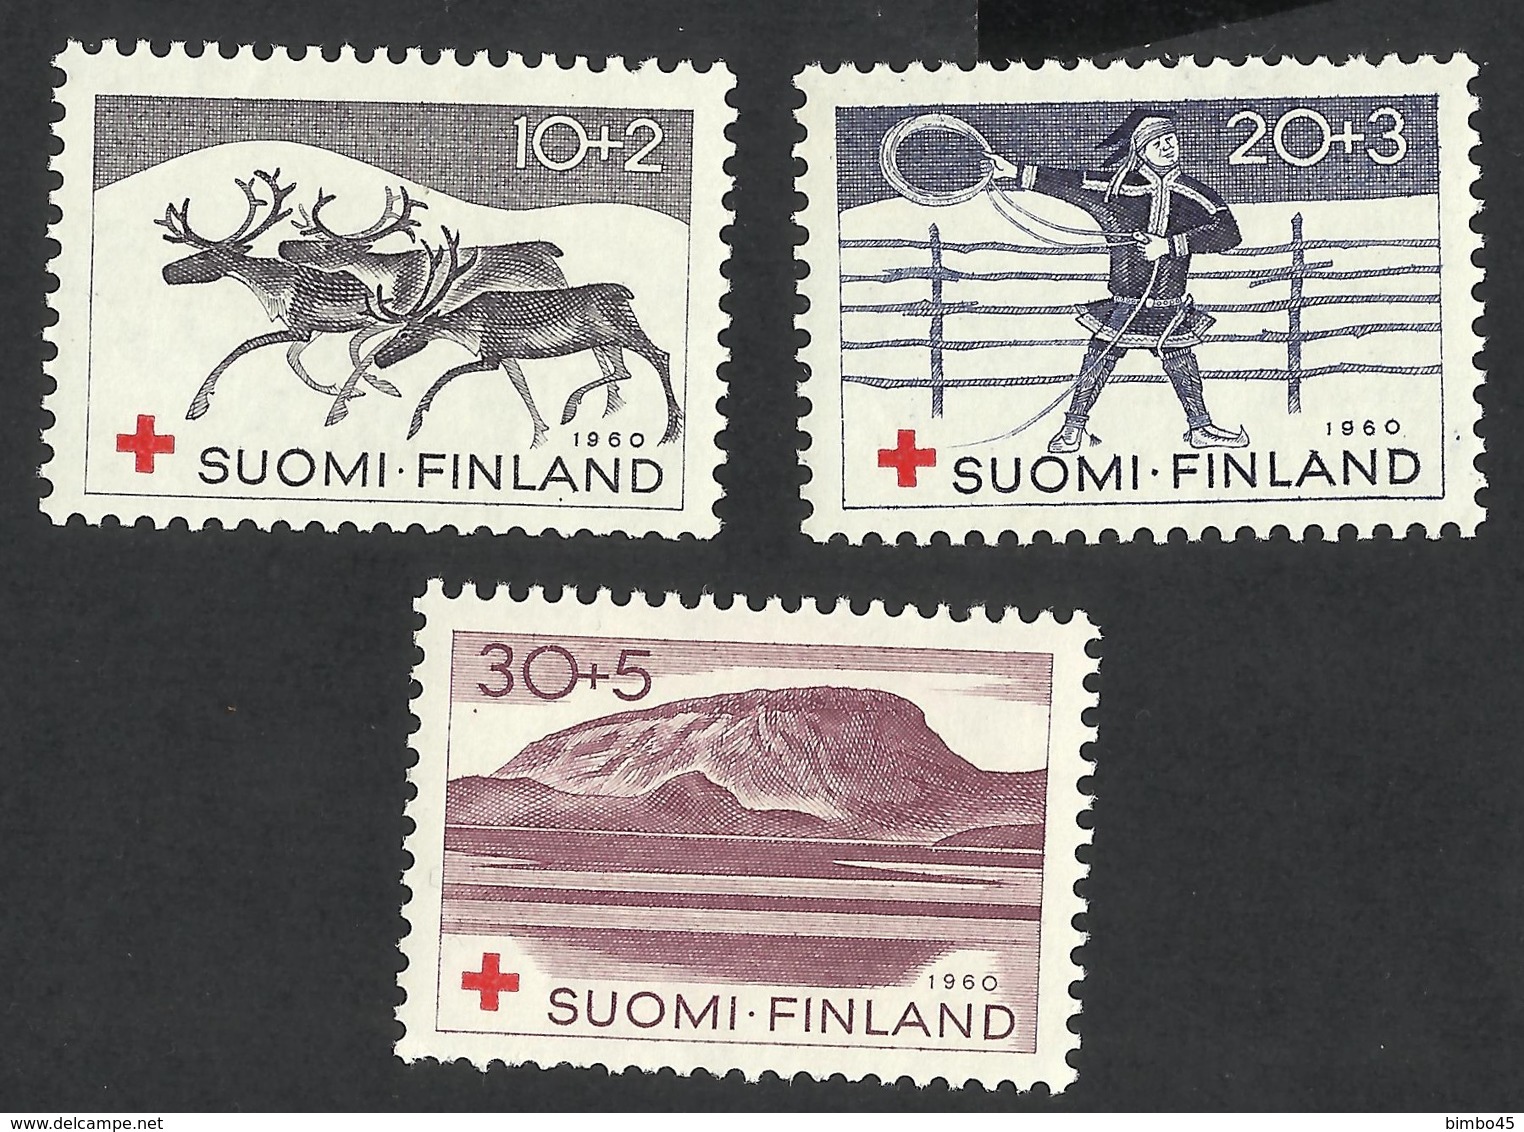 Errors, Freaks & Oddities --SUOMI / FINLAND-- 1960 RED CROSS--MNH - Errors, Freaks & Oddities (EFO)